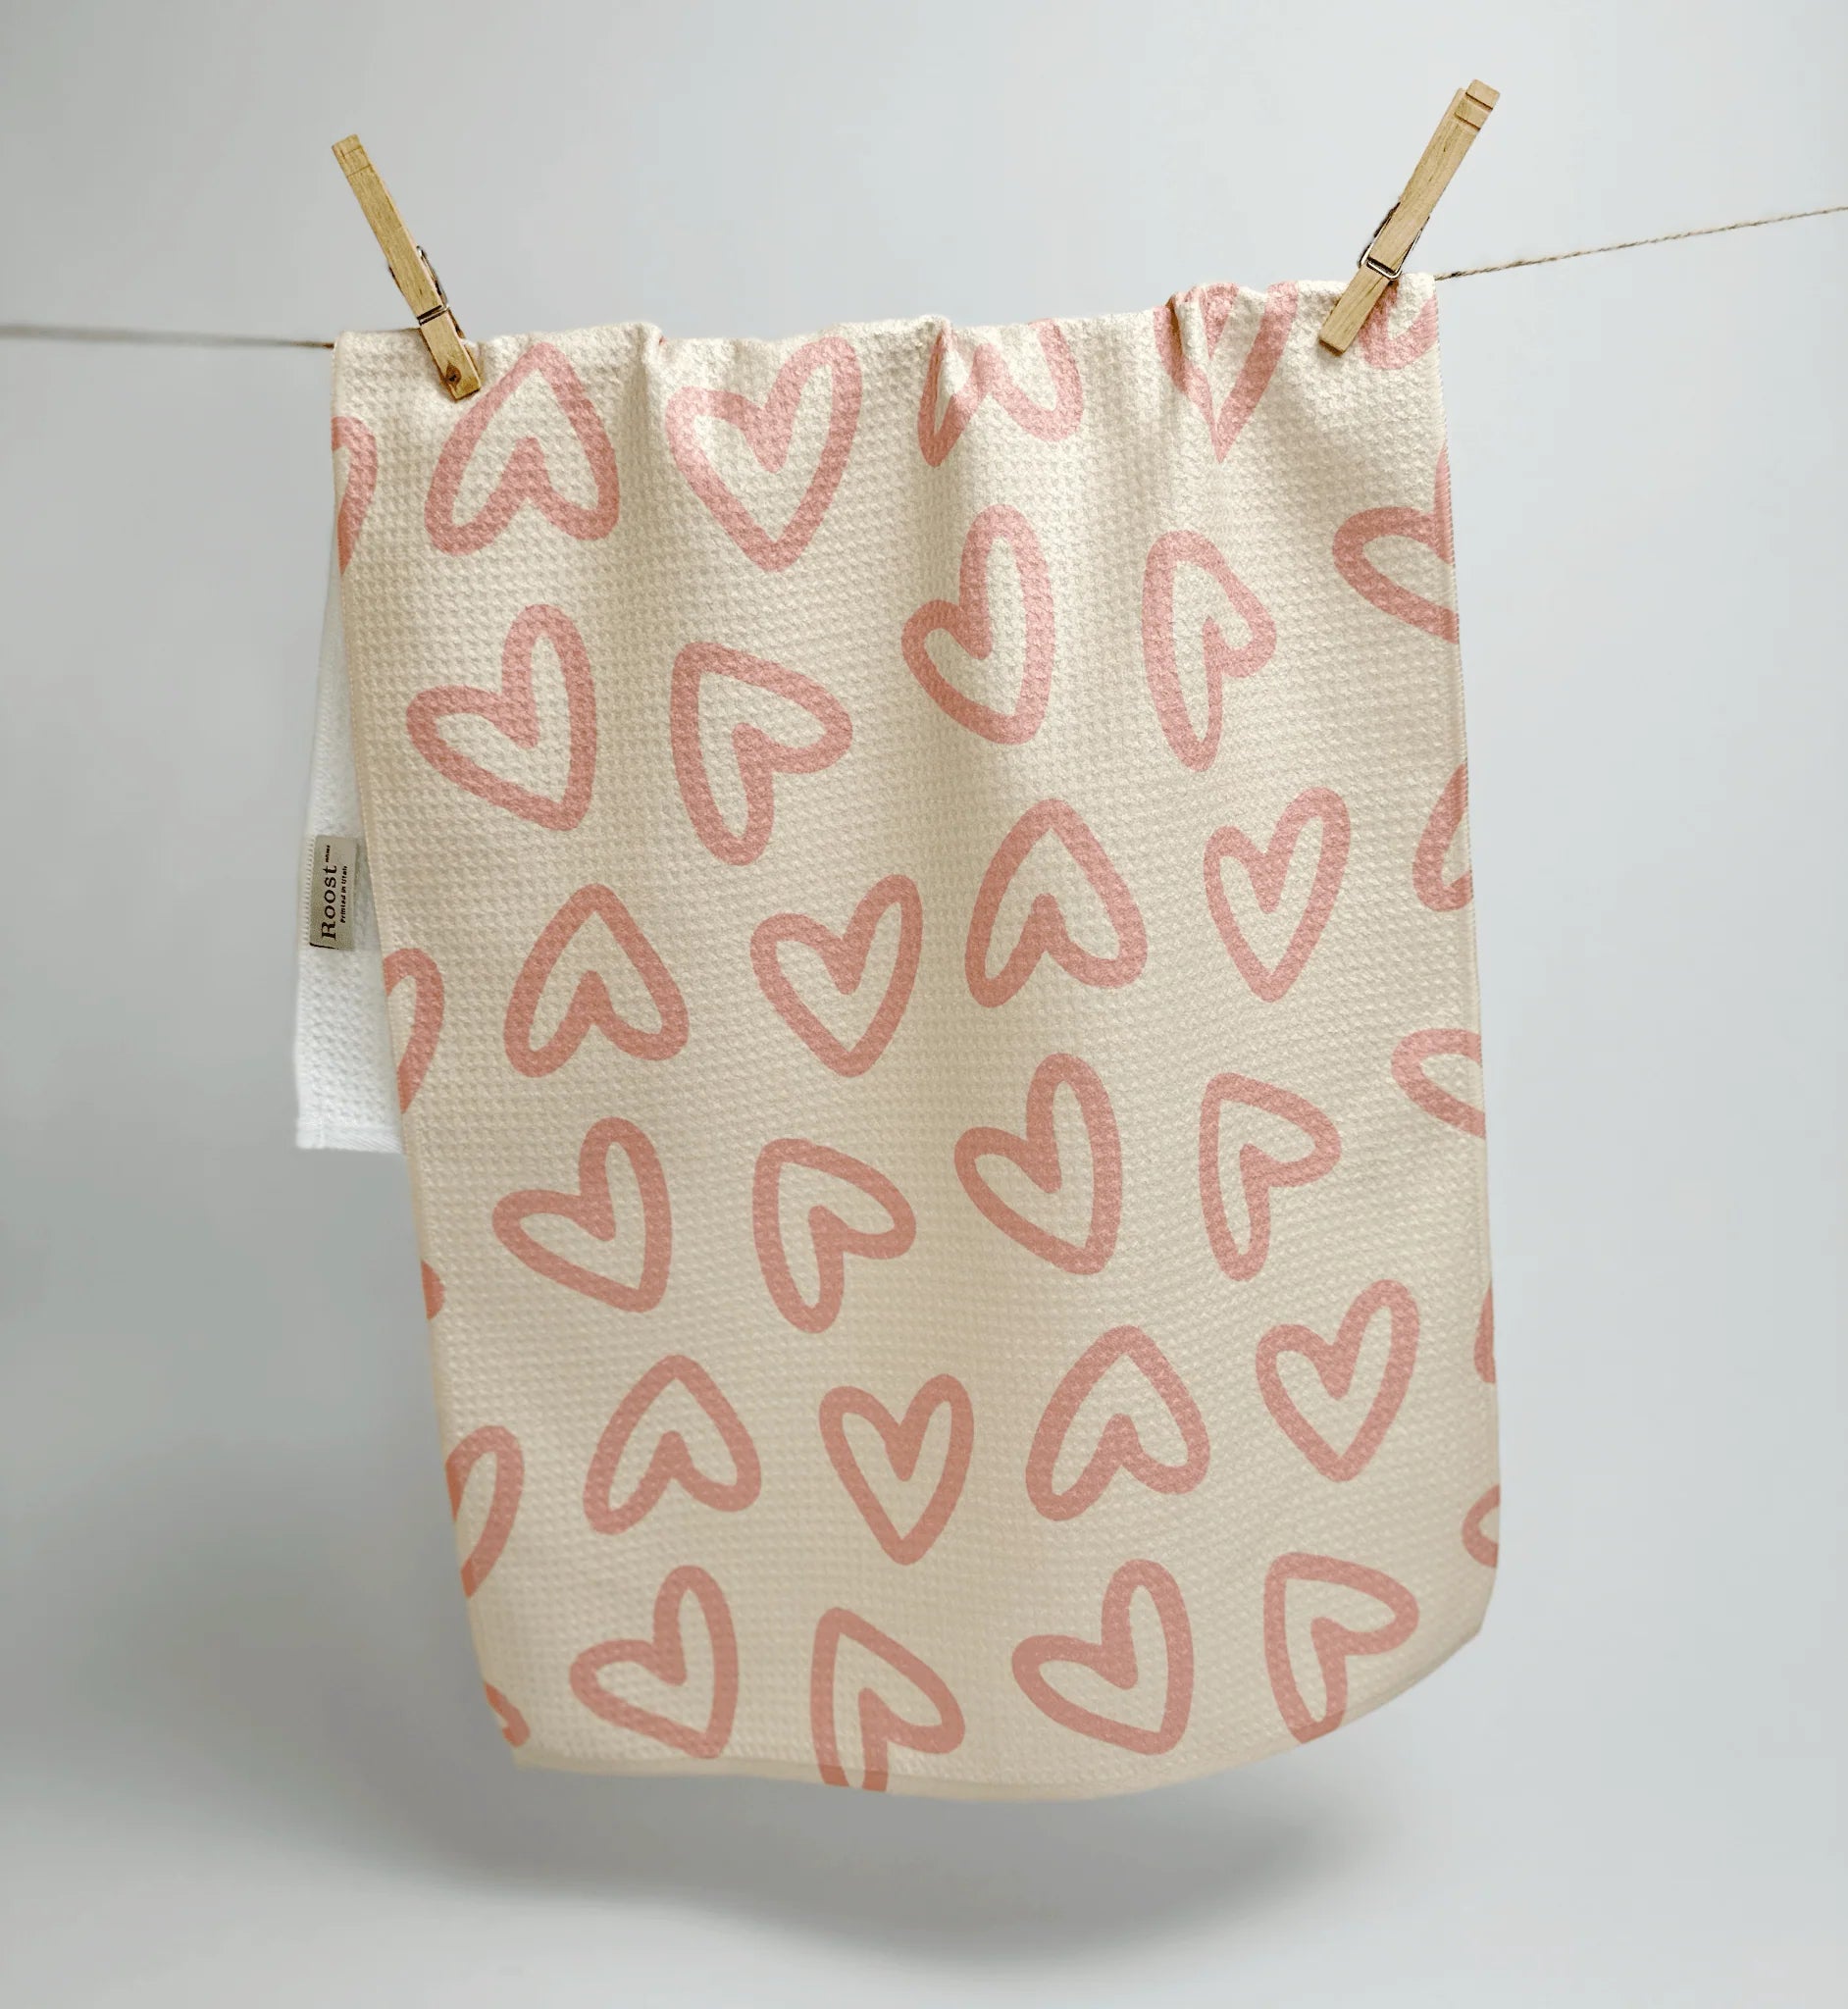 Pink Hearts Towel